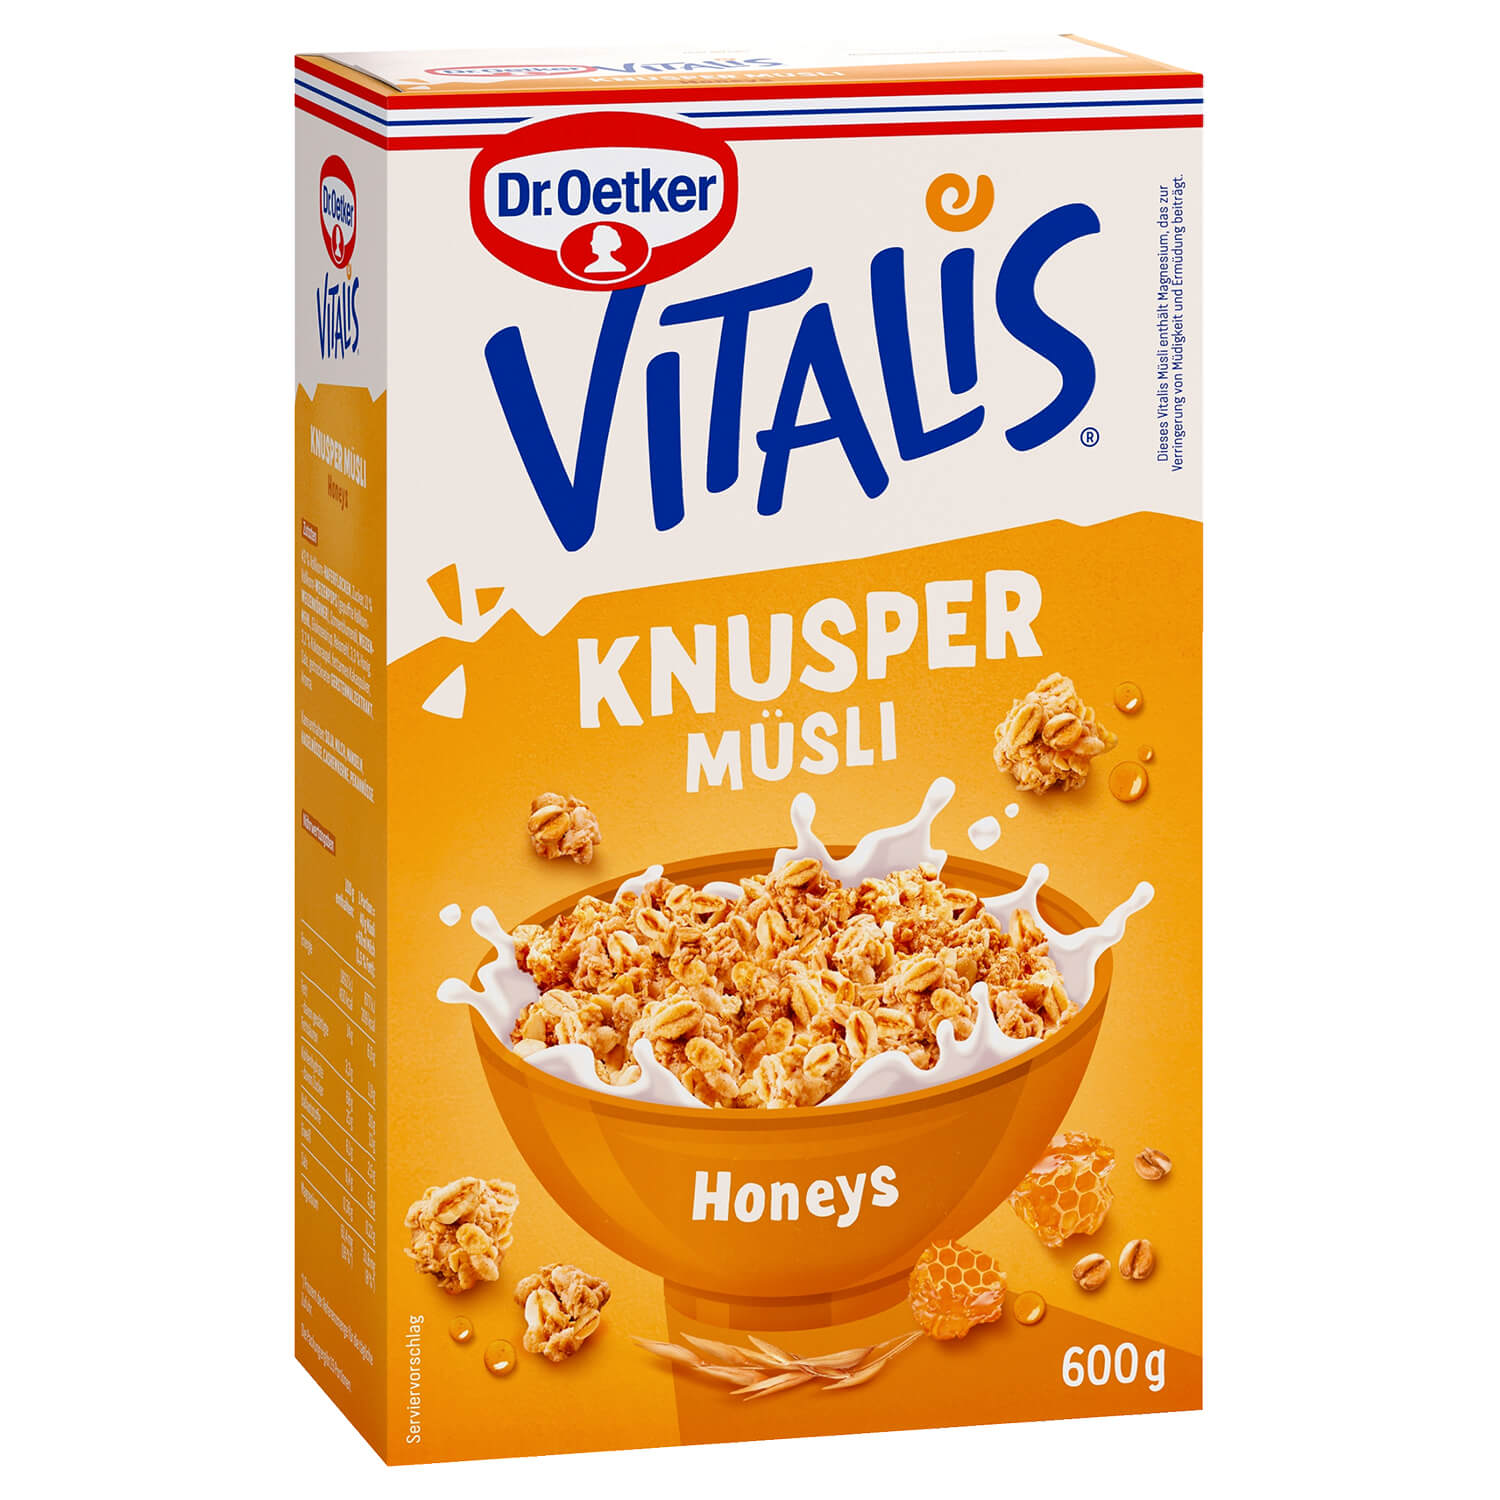 Dr. Oetker Vitalis Knuspermüsli Honeys 600g Packung